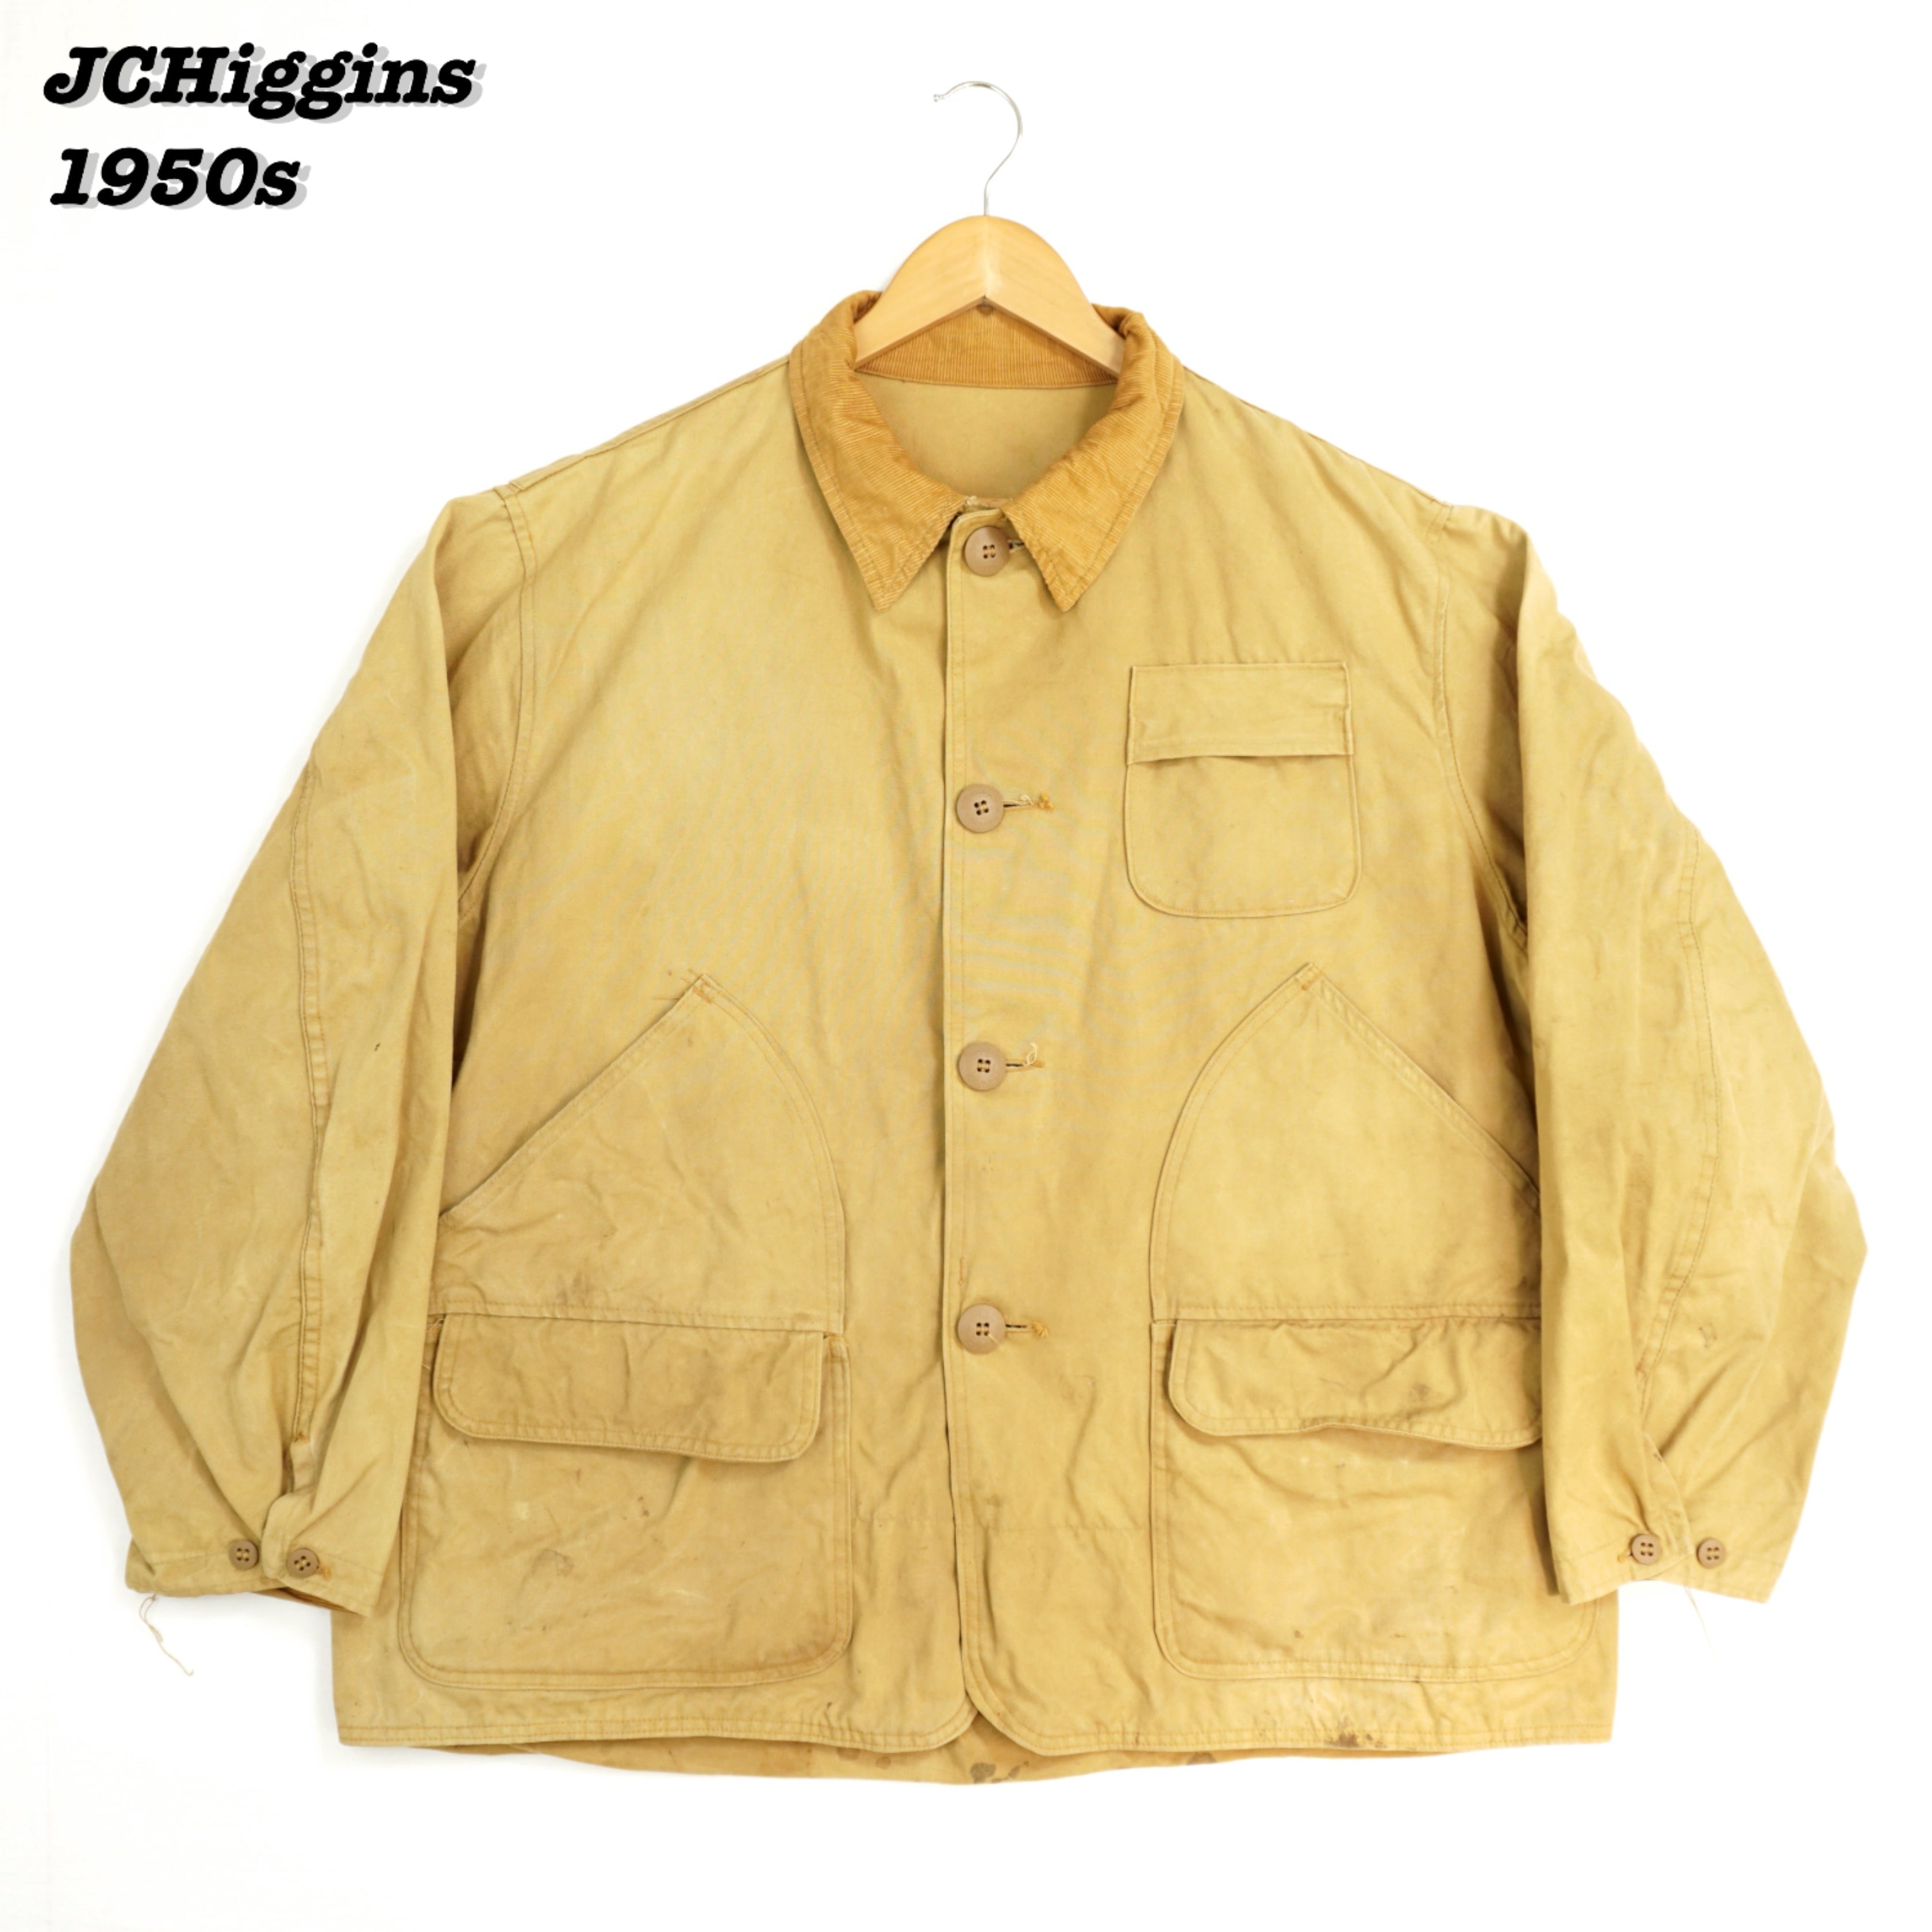 JCHiggins Hunting Jacket 1950s 304078